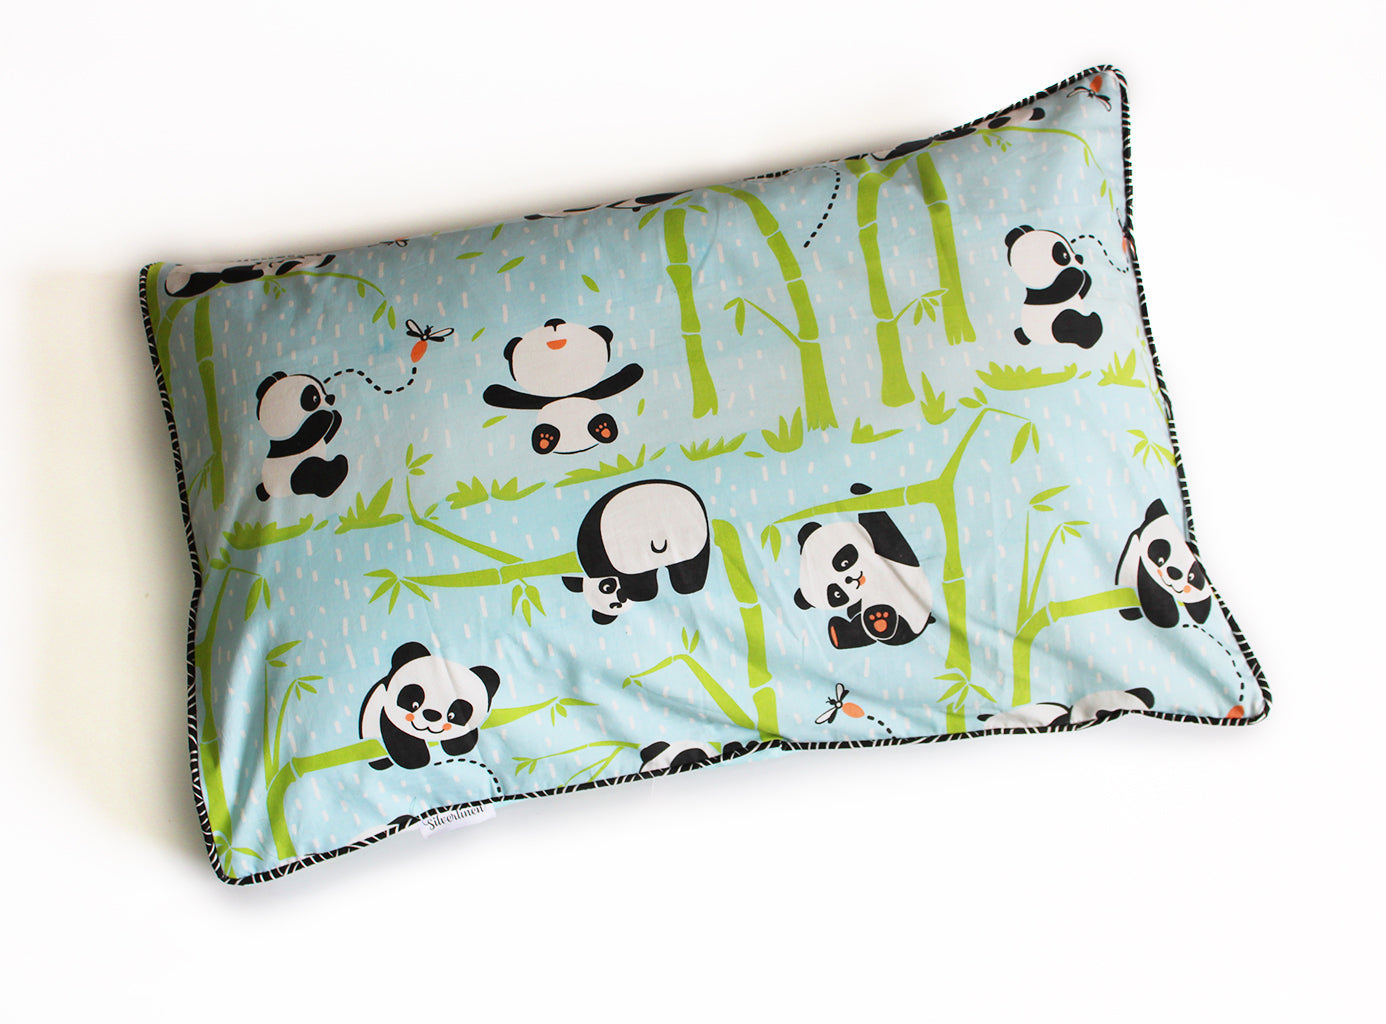 Panda Village Single Pillow Cover - Blue / Pink